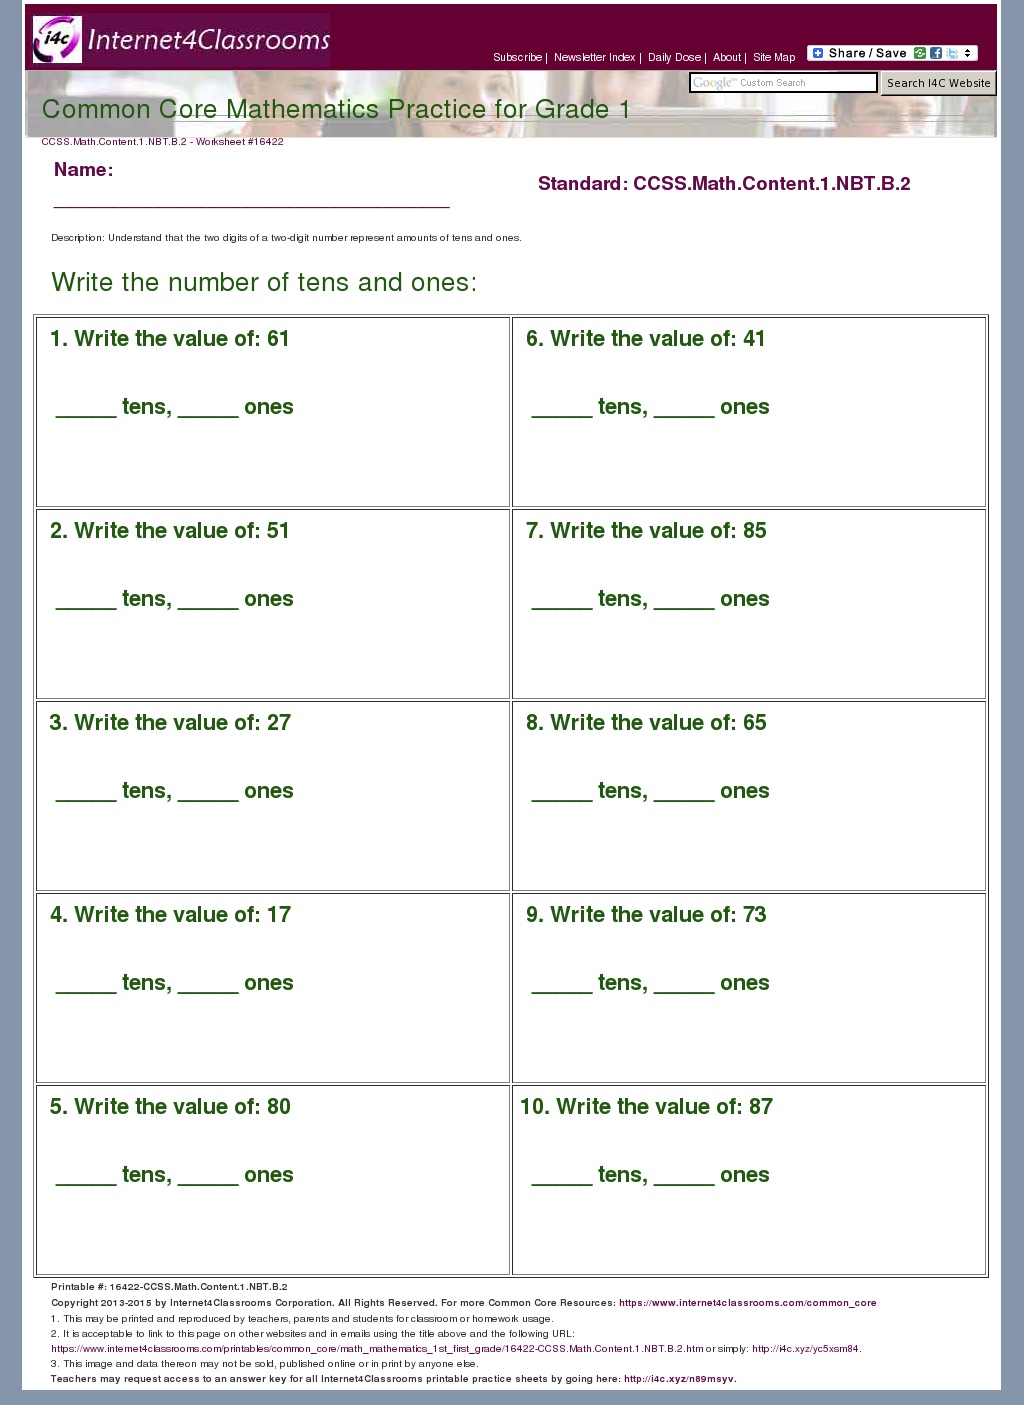 Description Download Worksheet 16422 CCSS Math Content 1 NBT B 2